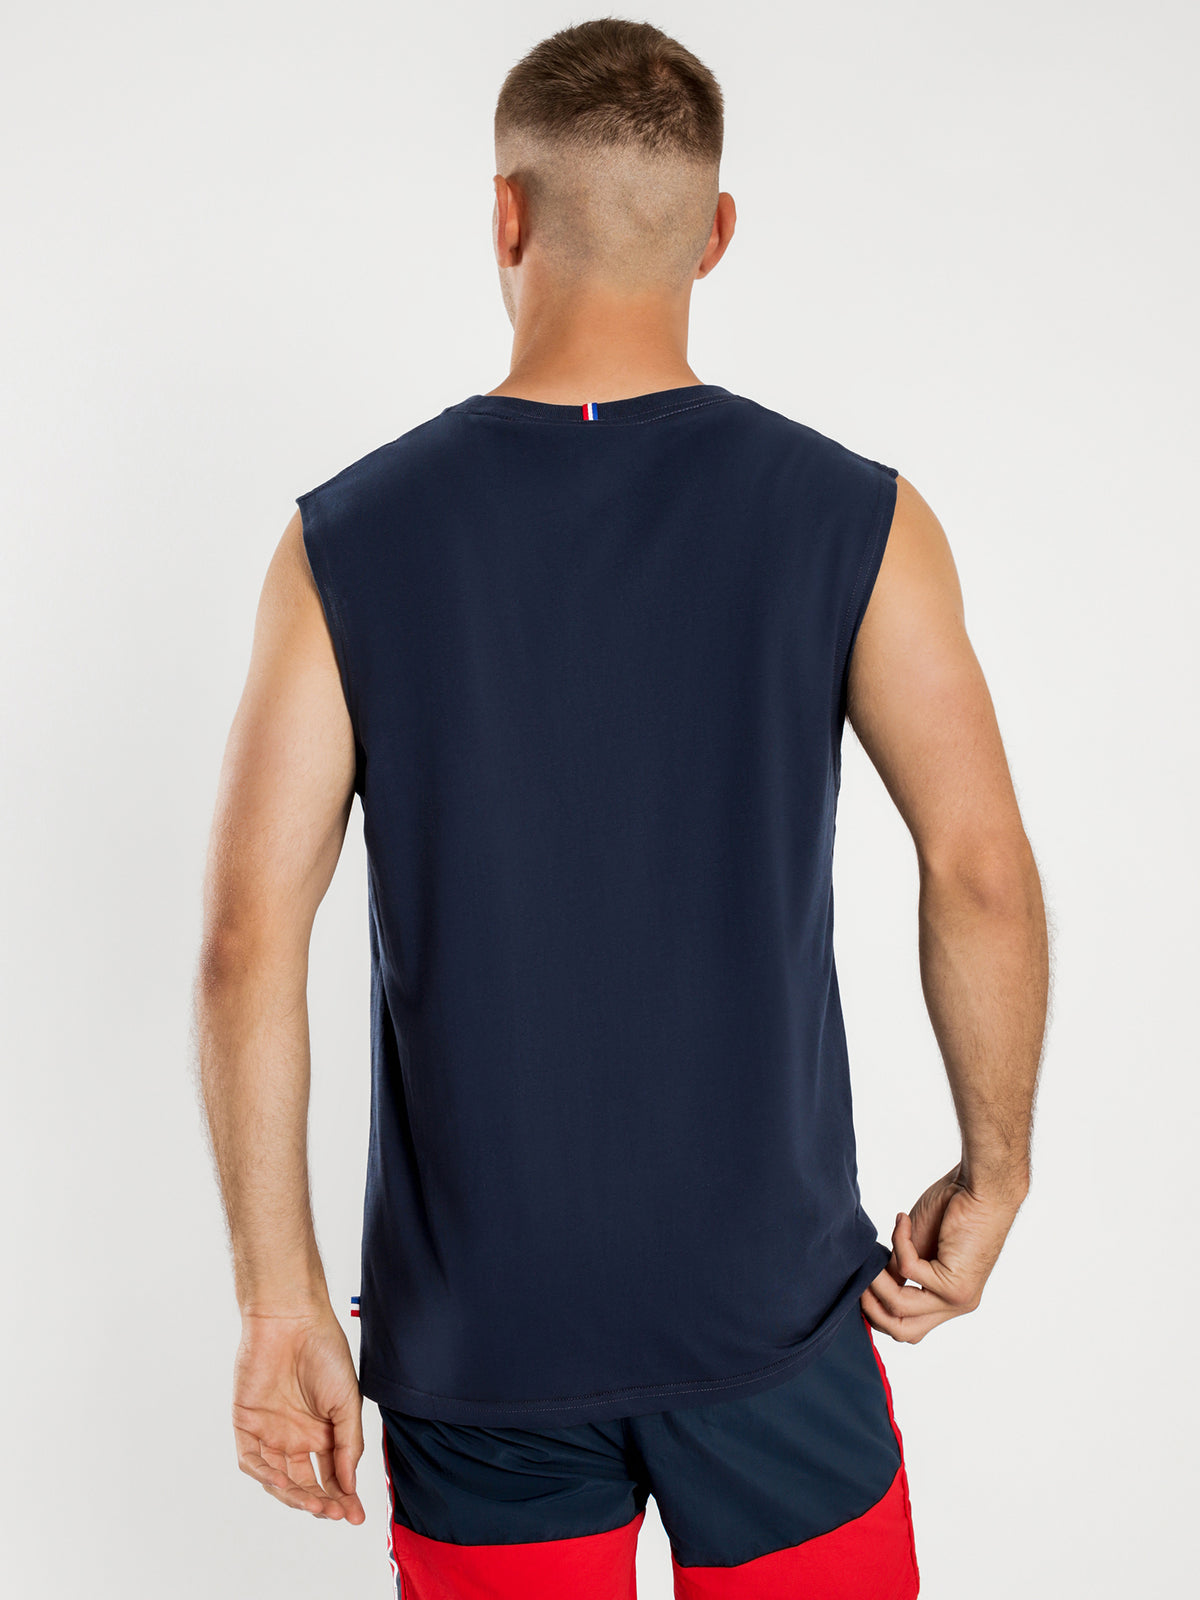 Dinan Muscle T-Shirt in Blue